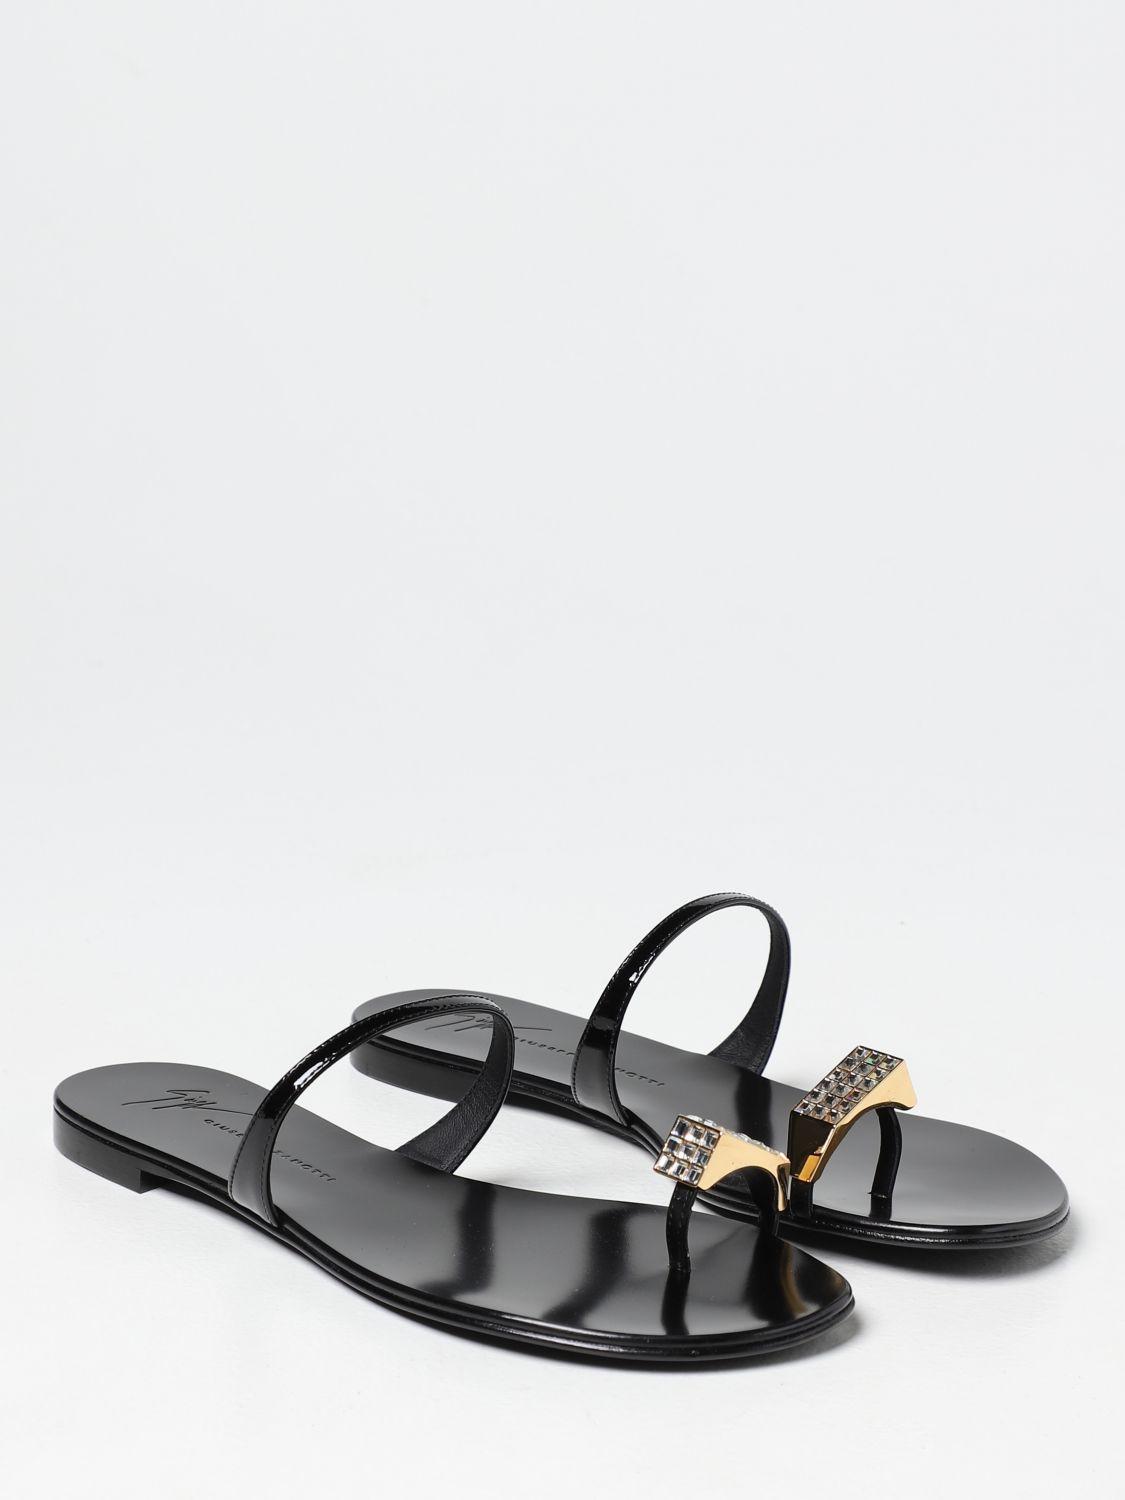 Giuseppe Zanotti Leather Flat Sandals | Lyst